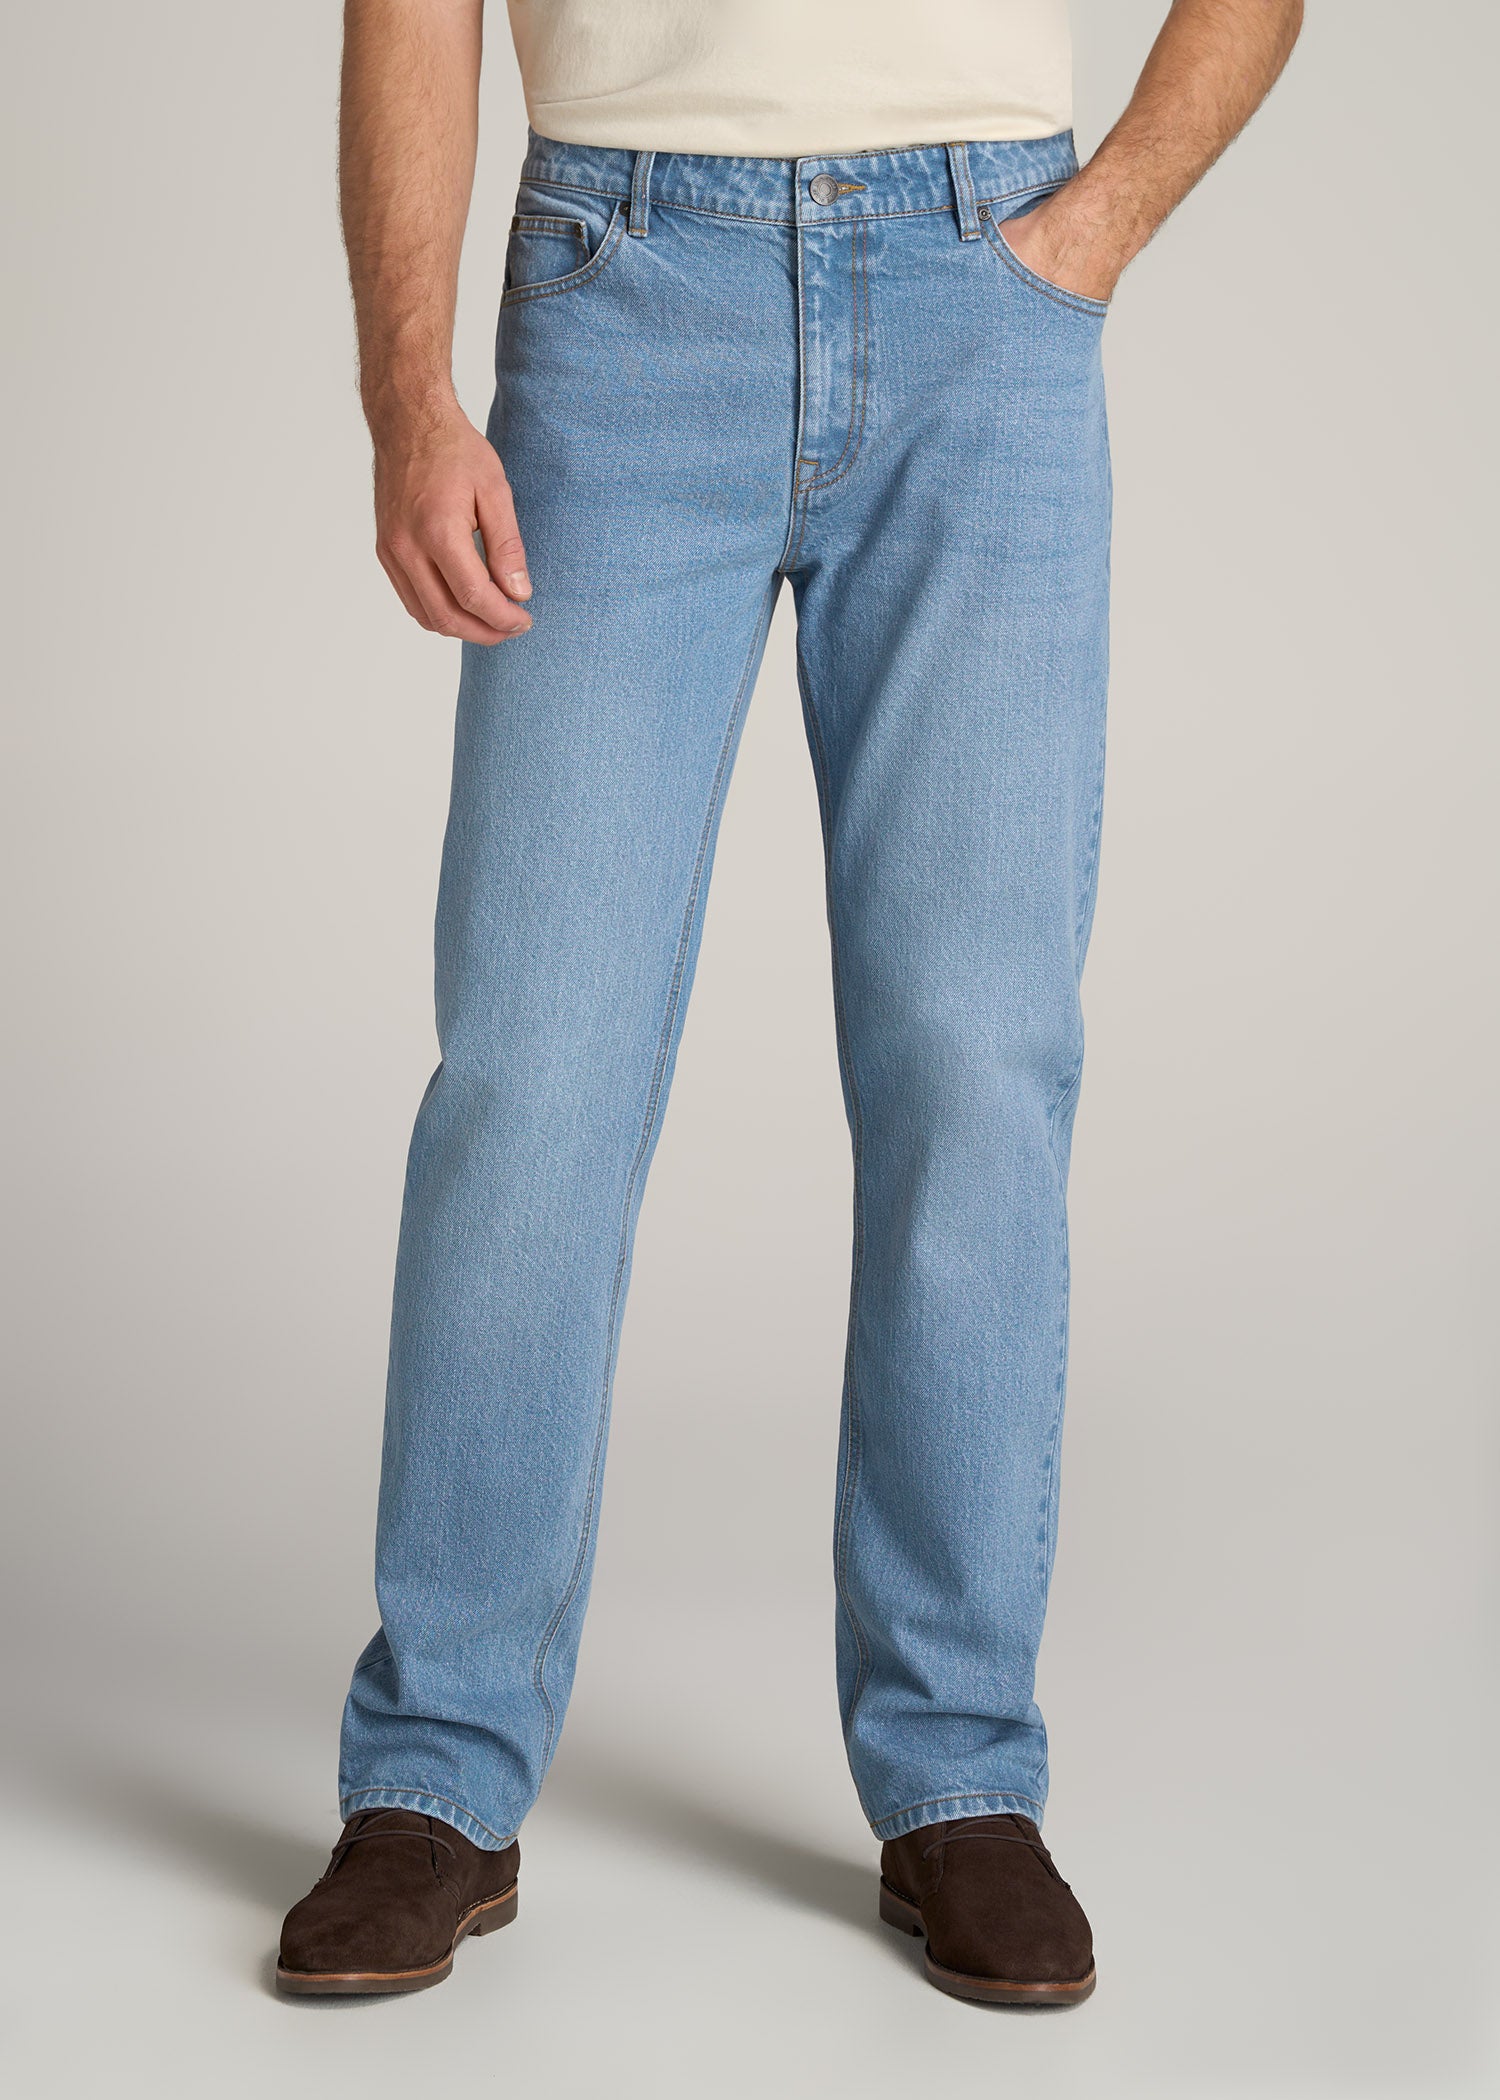 LJ&S Men's Tall Jeans Straight Leg Stone Wash Light Blue